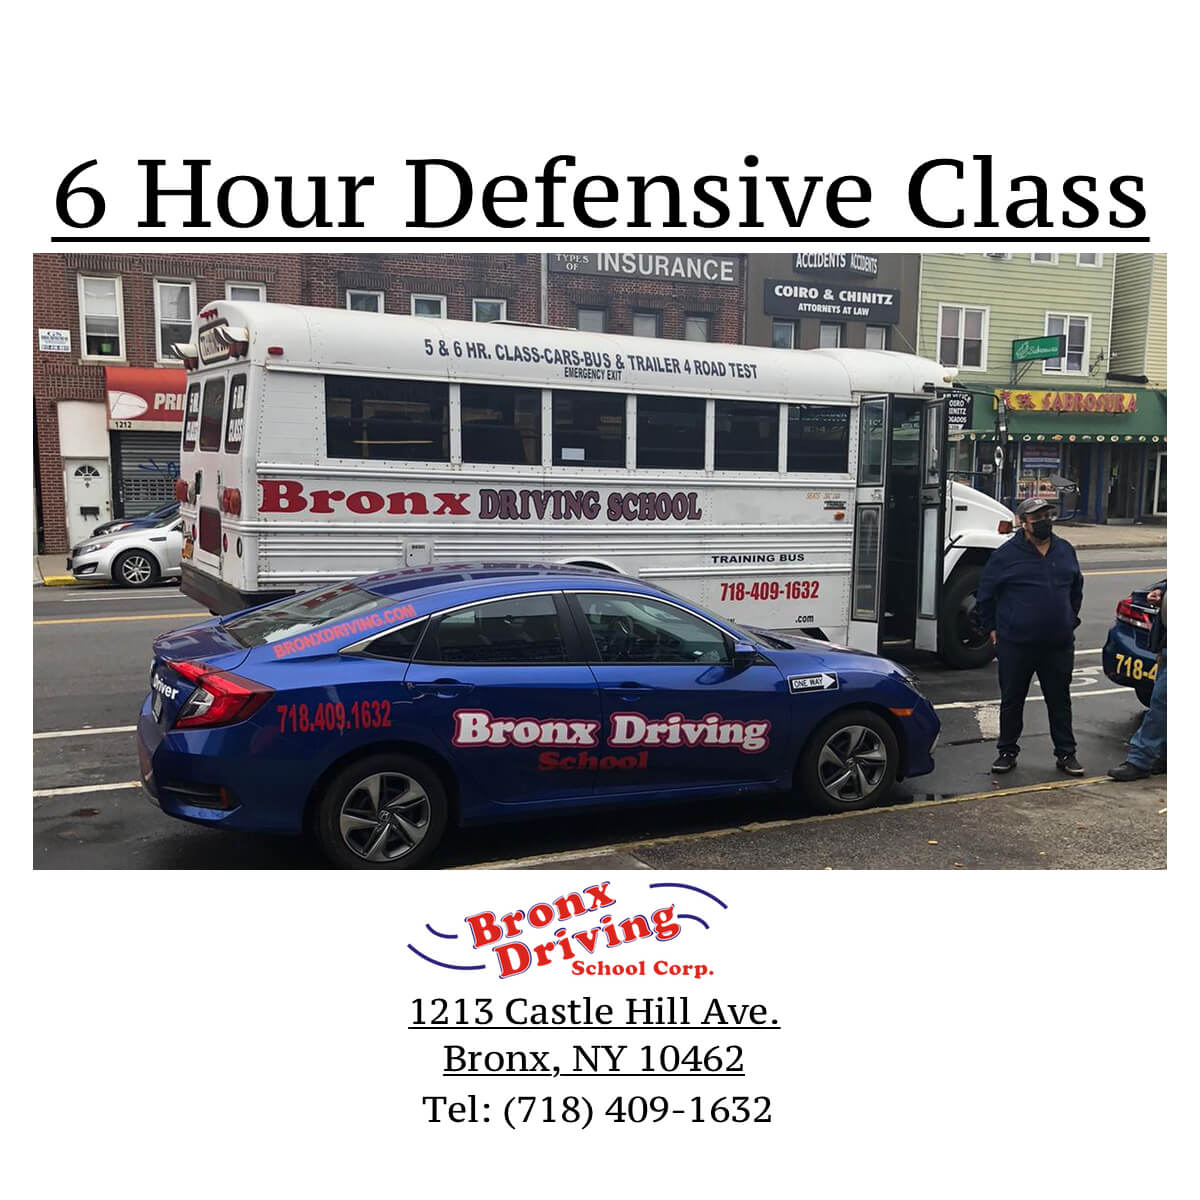 Bronx Driving School 6 Hour Defensive Class